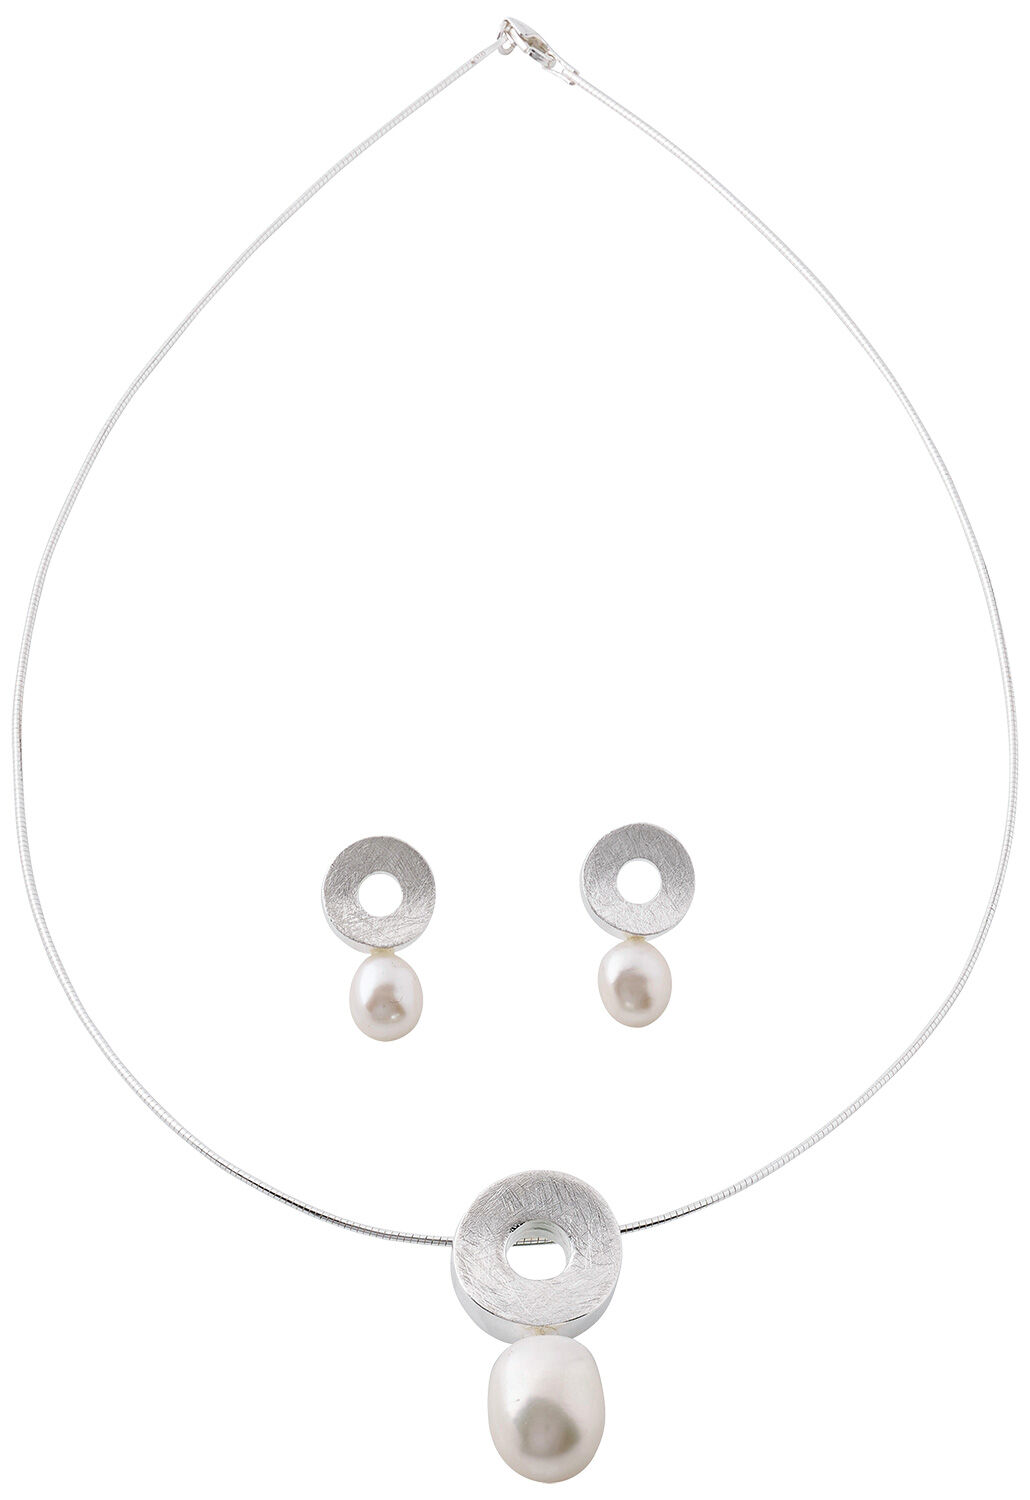 Jewellery set "Estelle" with pearls